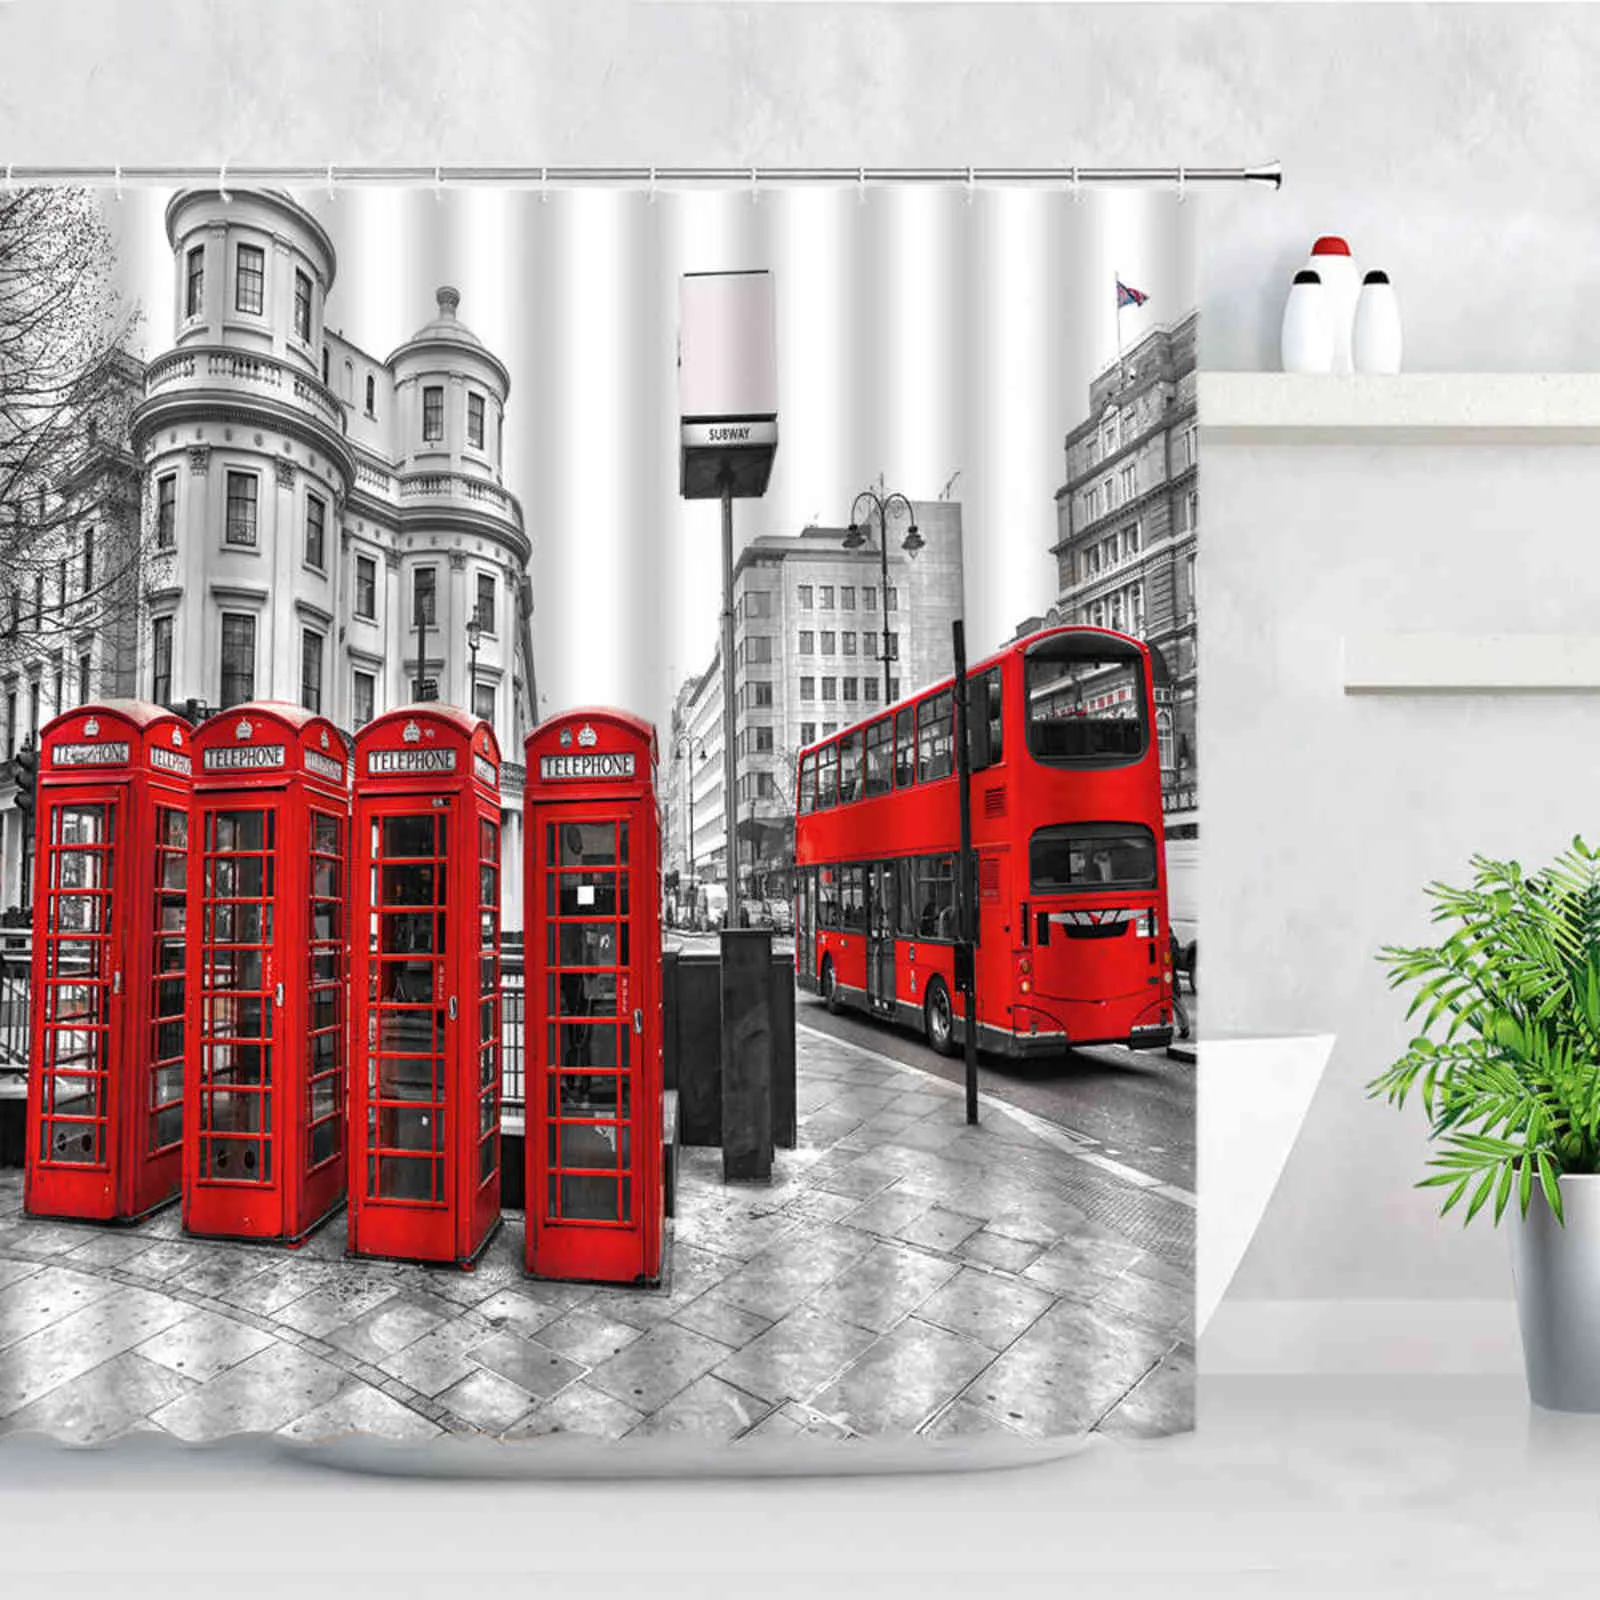 London Street View Shower Curtains Big Ben Red phone Booth Bus Printing Retro Wall Decor Cloth Screen Hooks Bathroom Curtain Set 211116